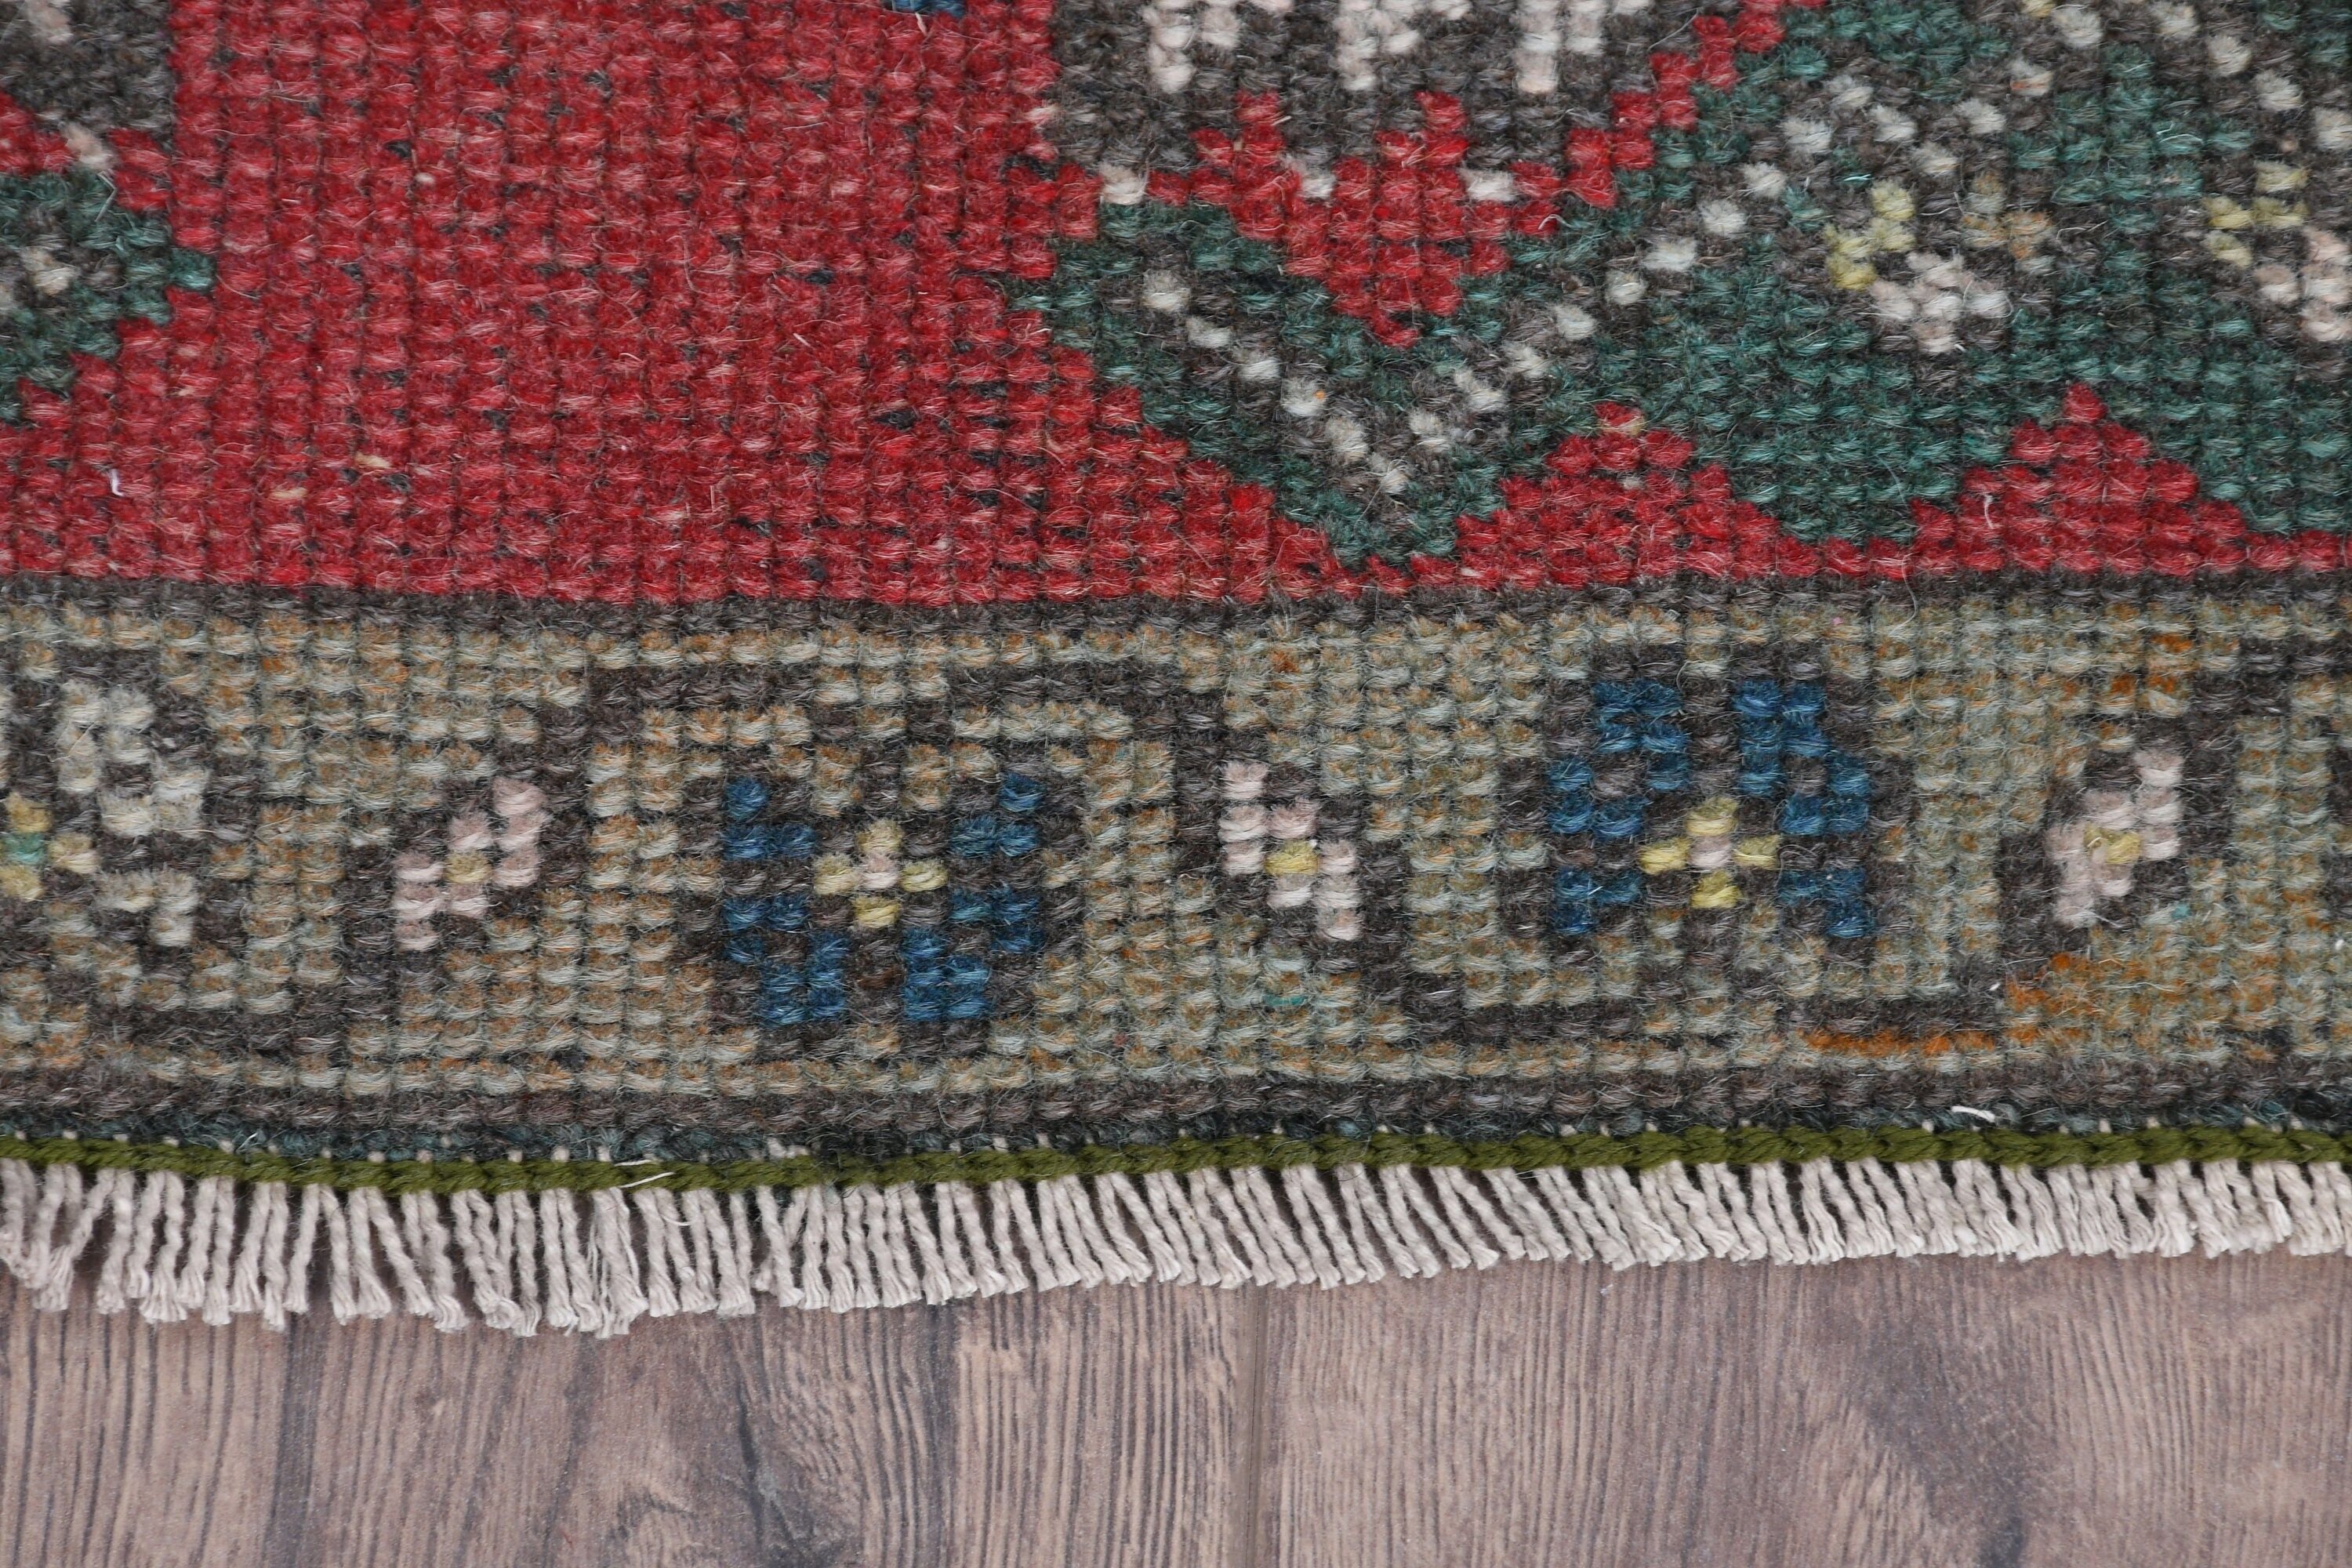 Kitchen Rug, Vintage Rug, Authentic Rug, Oushak Rugs, Bathroom Rugs, Turkish Rugs, Green Bedroom Rug, 1.8x3.2 ft Small Rug, Moroccan Rug